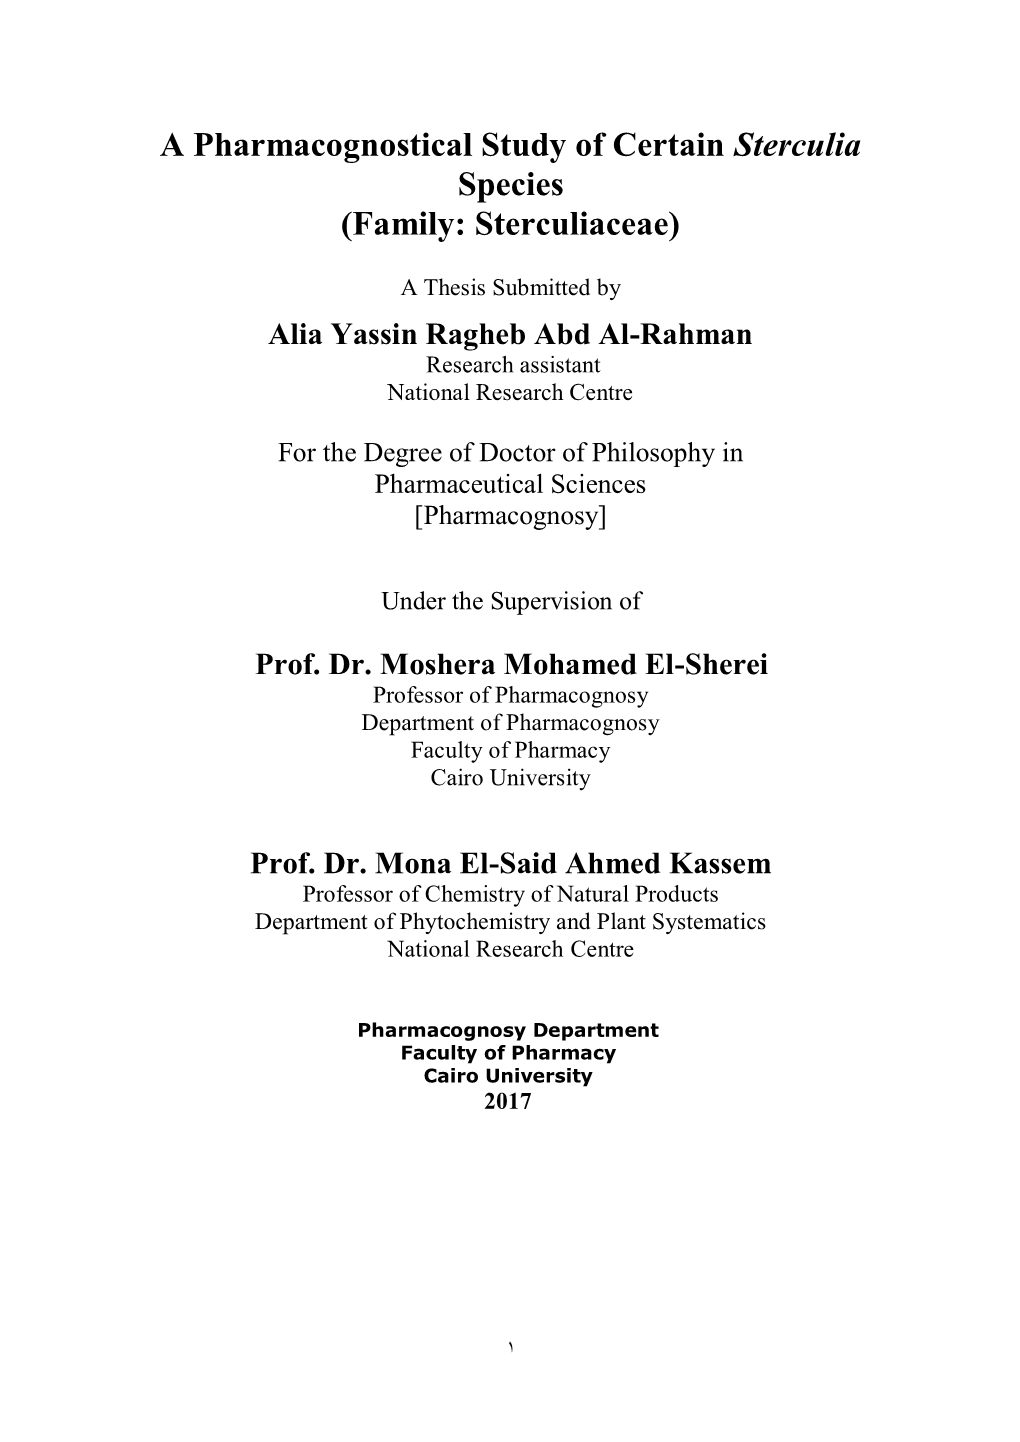 A Pharmacognostical Study of Certain Sterculia Species (Family: Sterculiaceae)